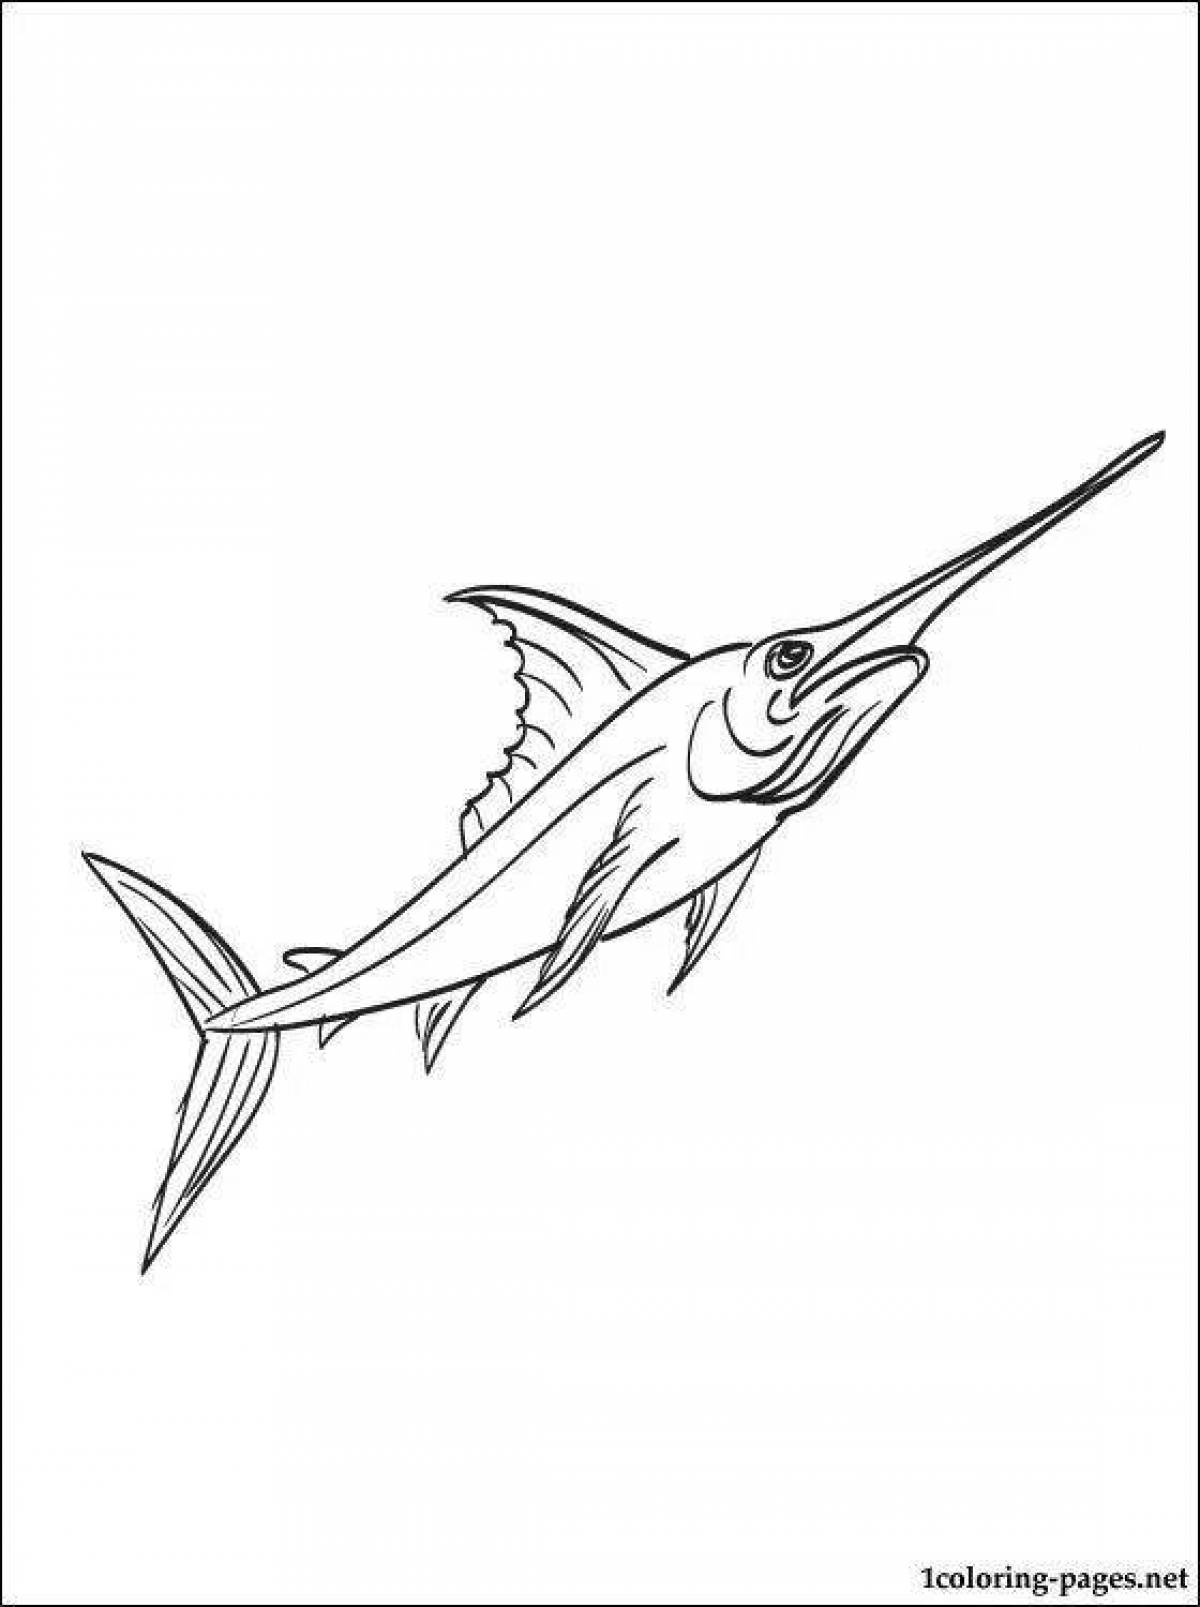 Sawfish coloring page